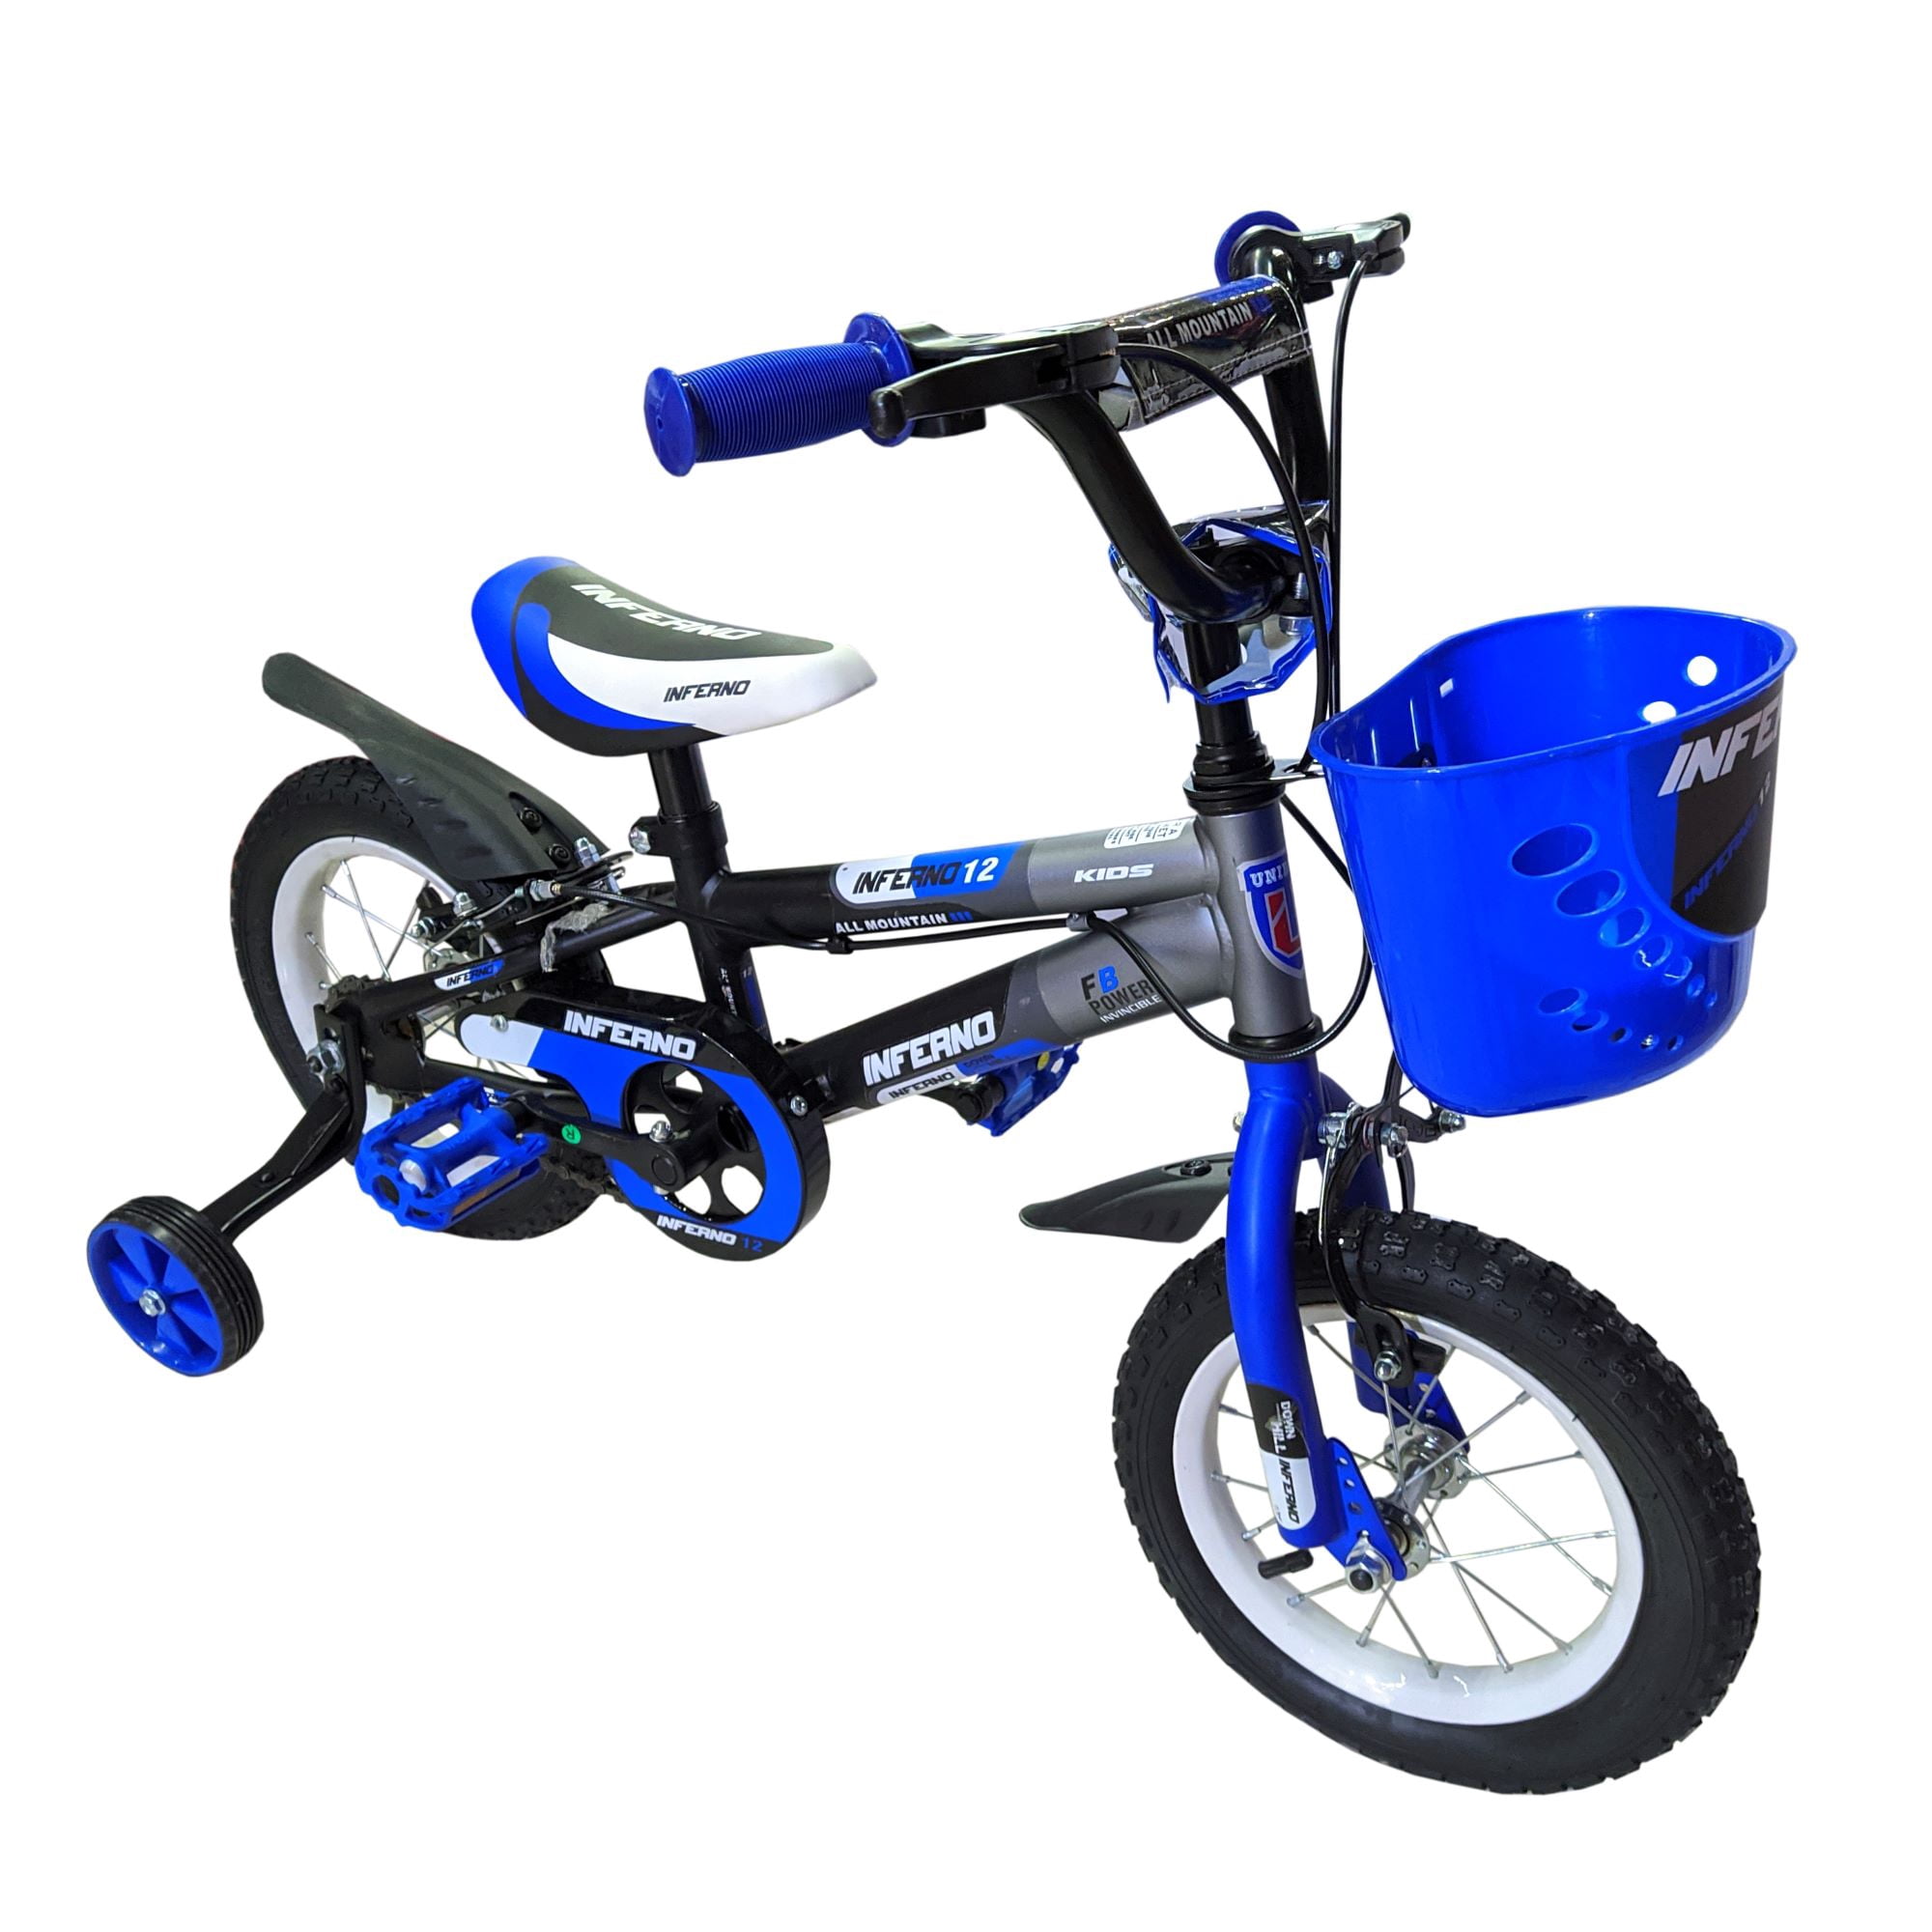 Bicimundo, Bicicleta infantil Wander Snowy R12 1v